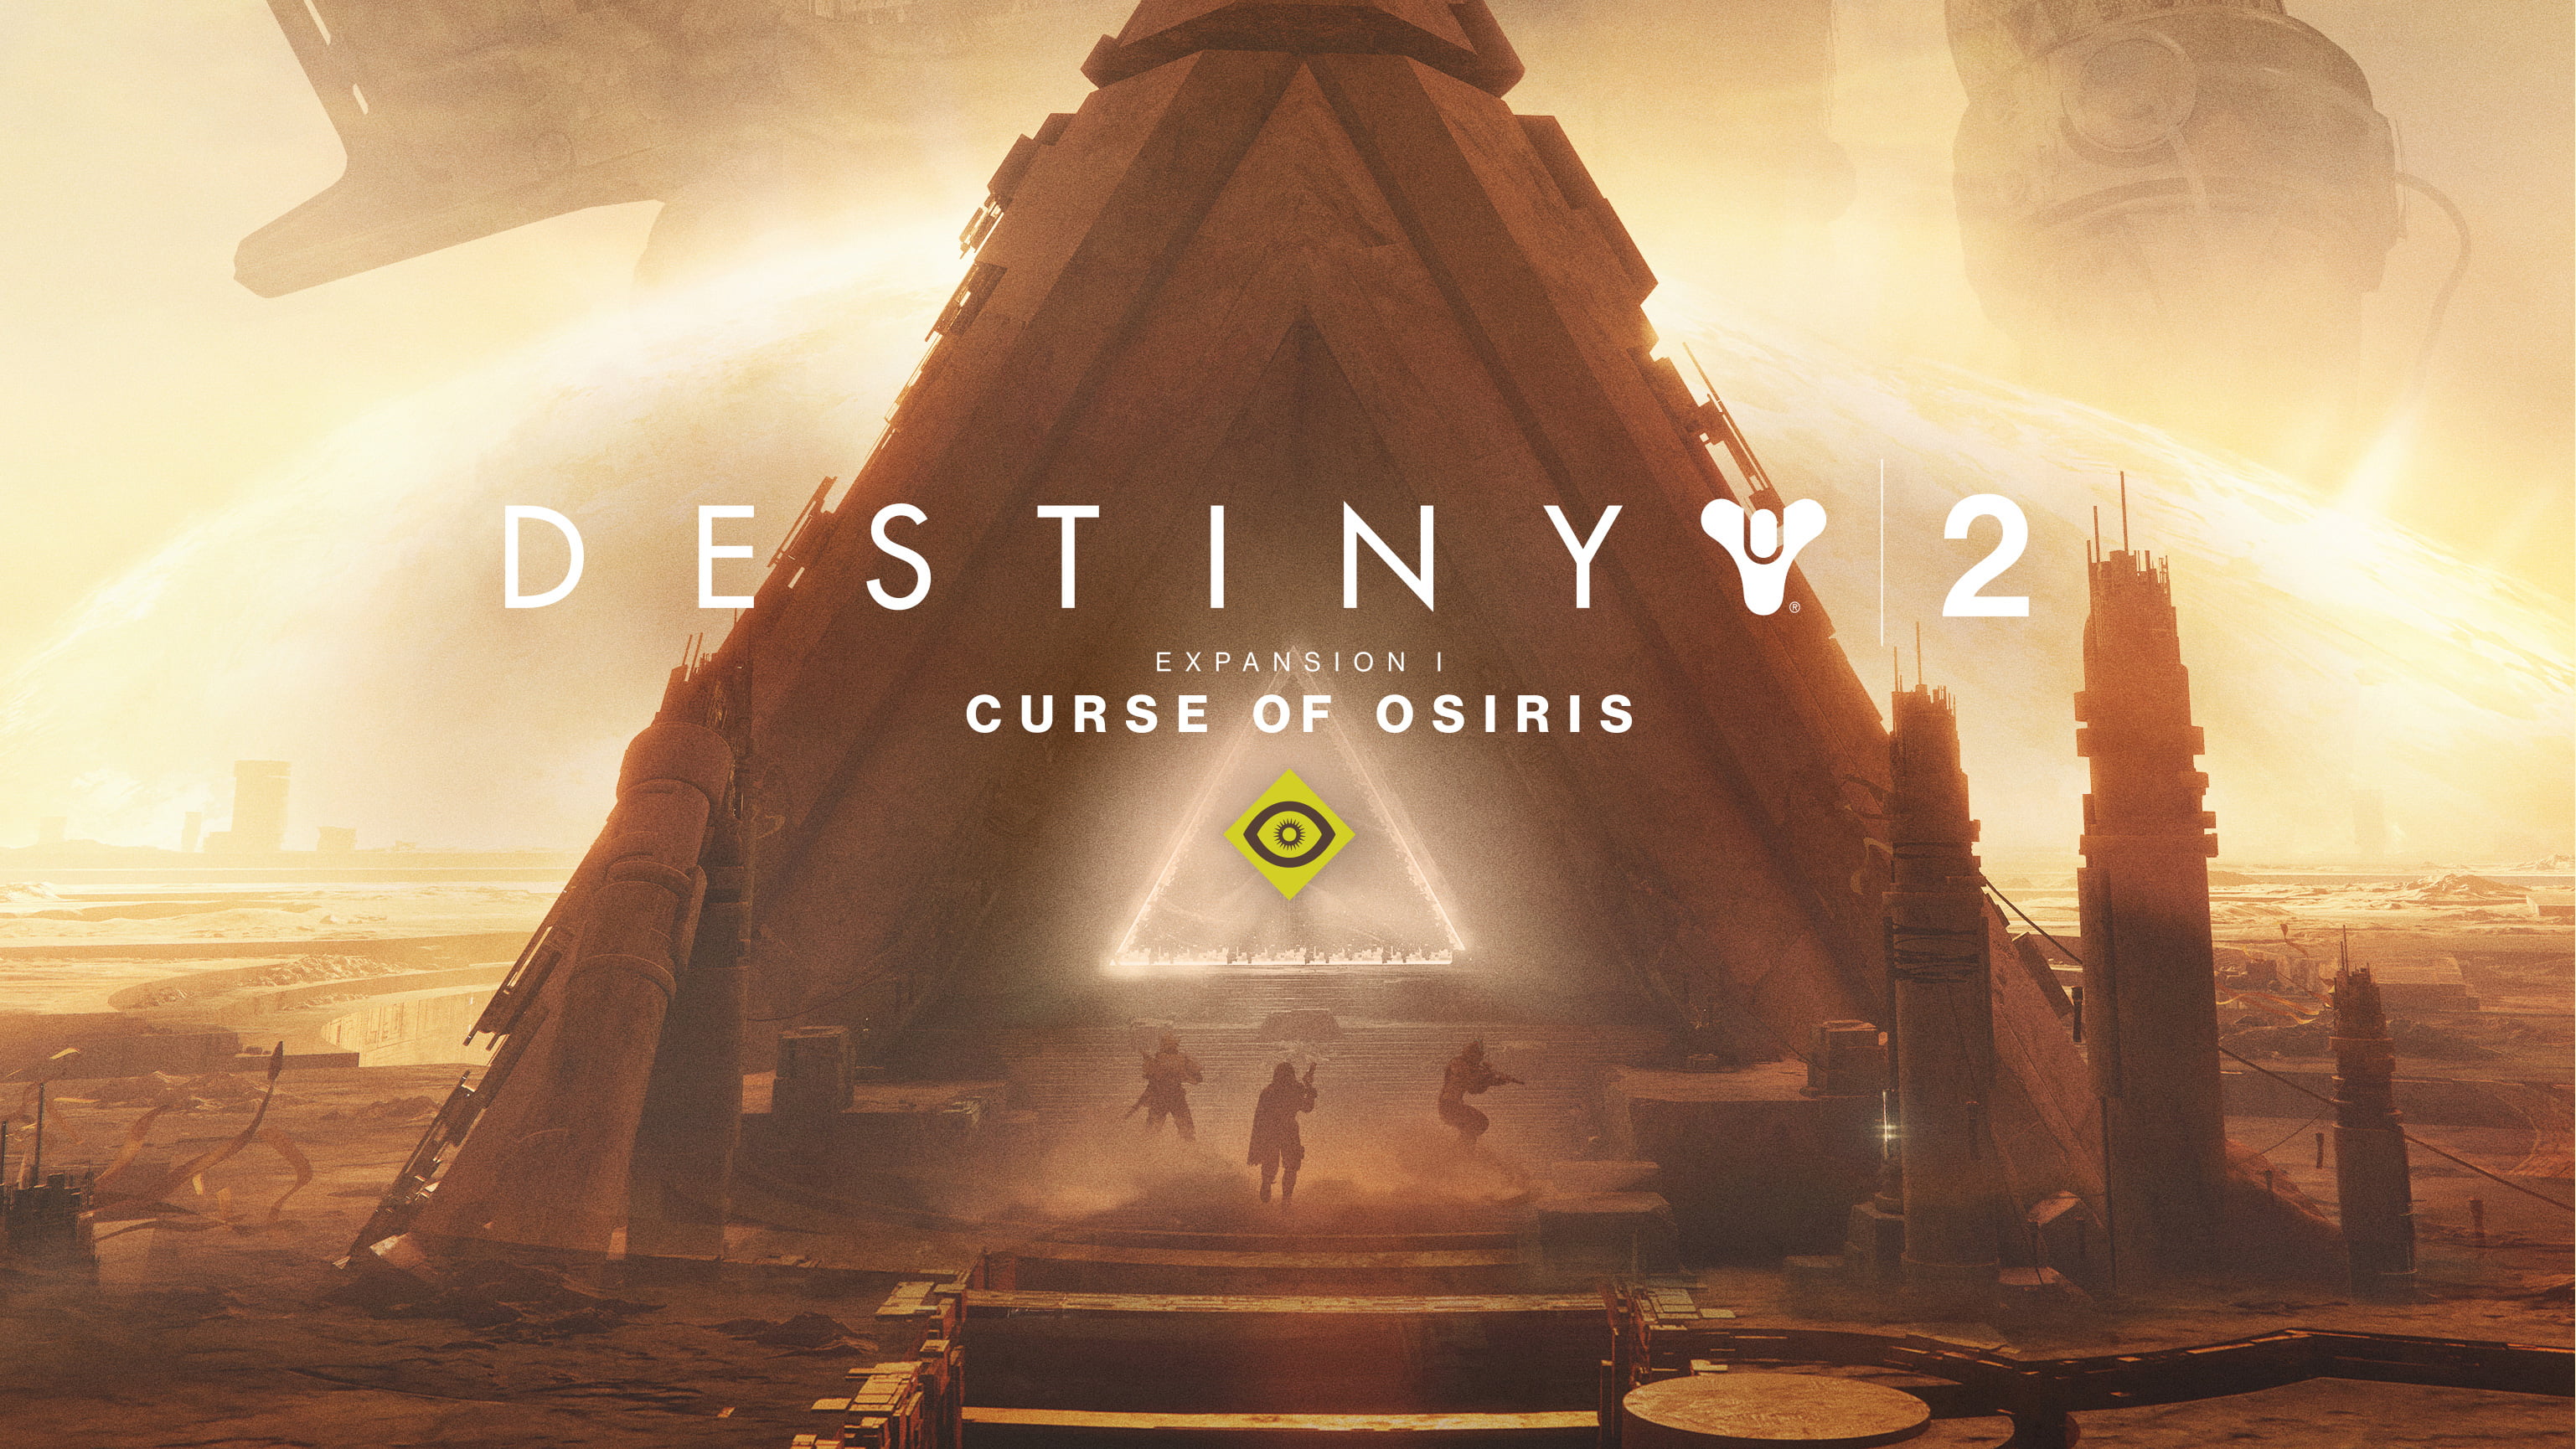 Destiny 2 Curse of Osiris illustration